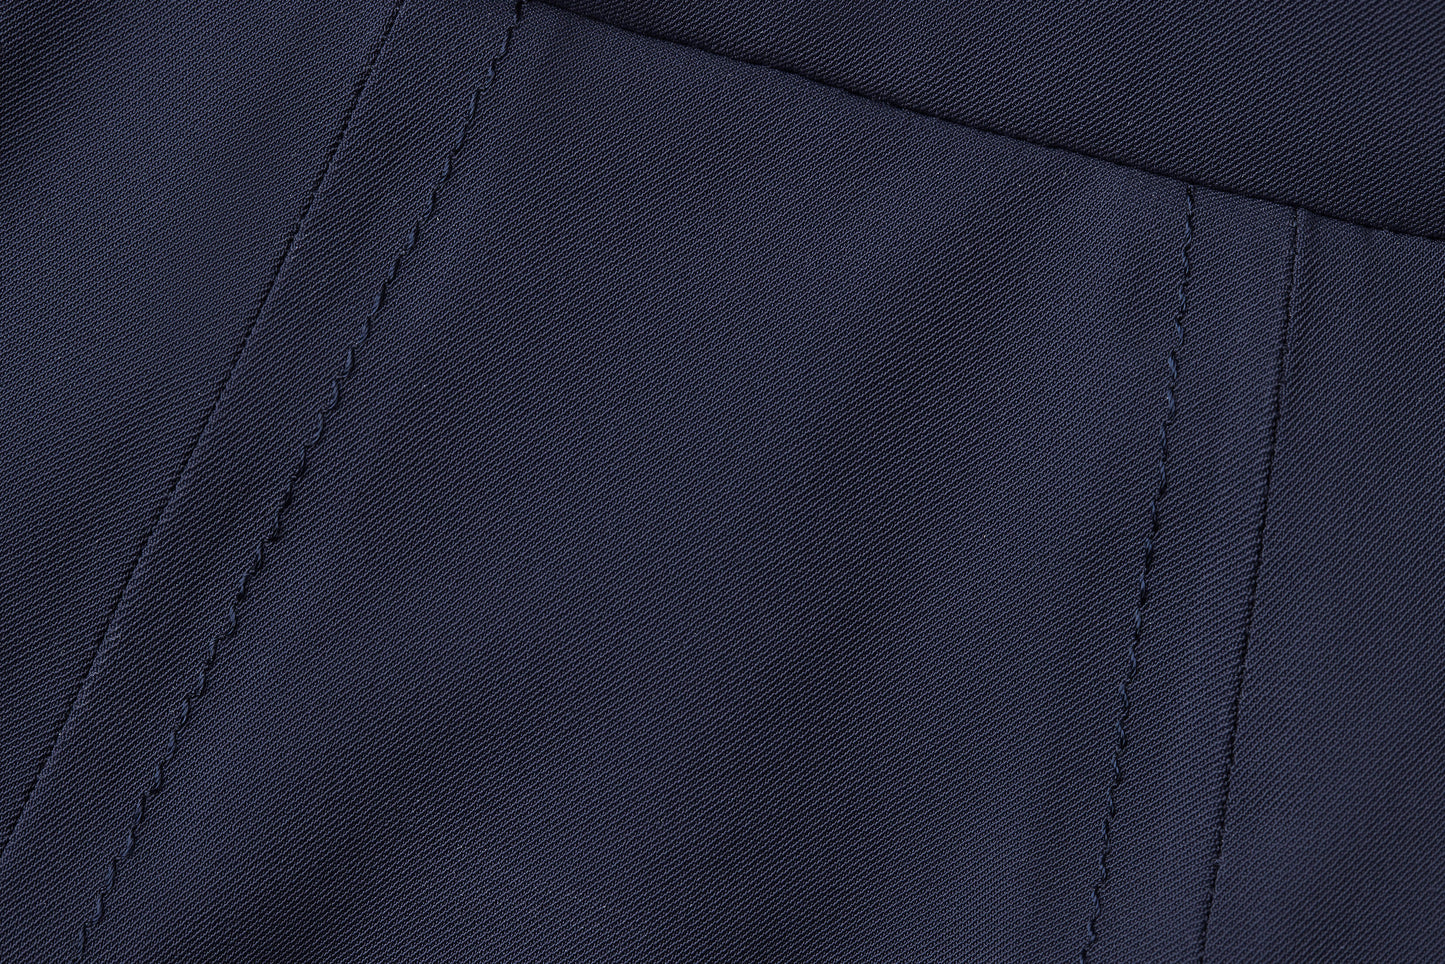 close up of navy fabric